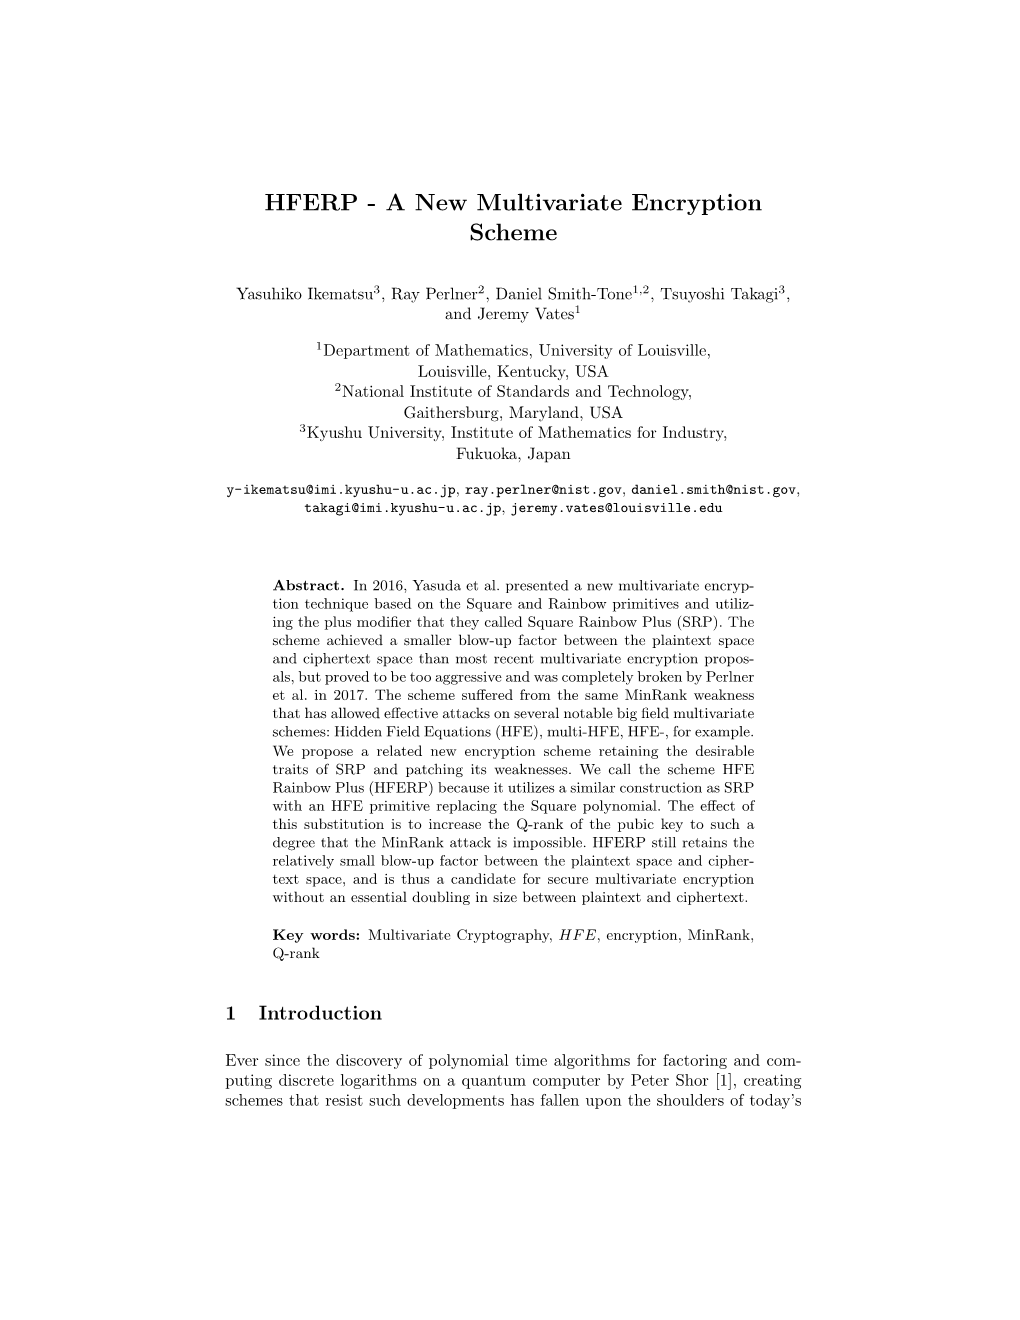 A New Multivariate Encryption Scheme